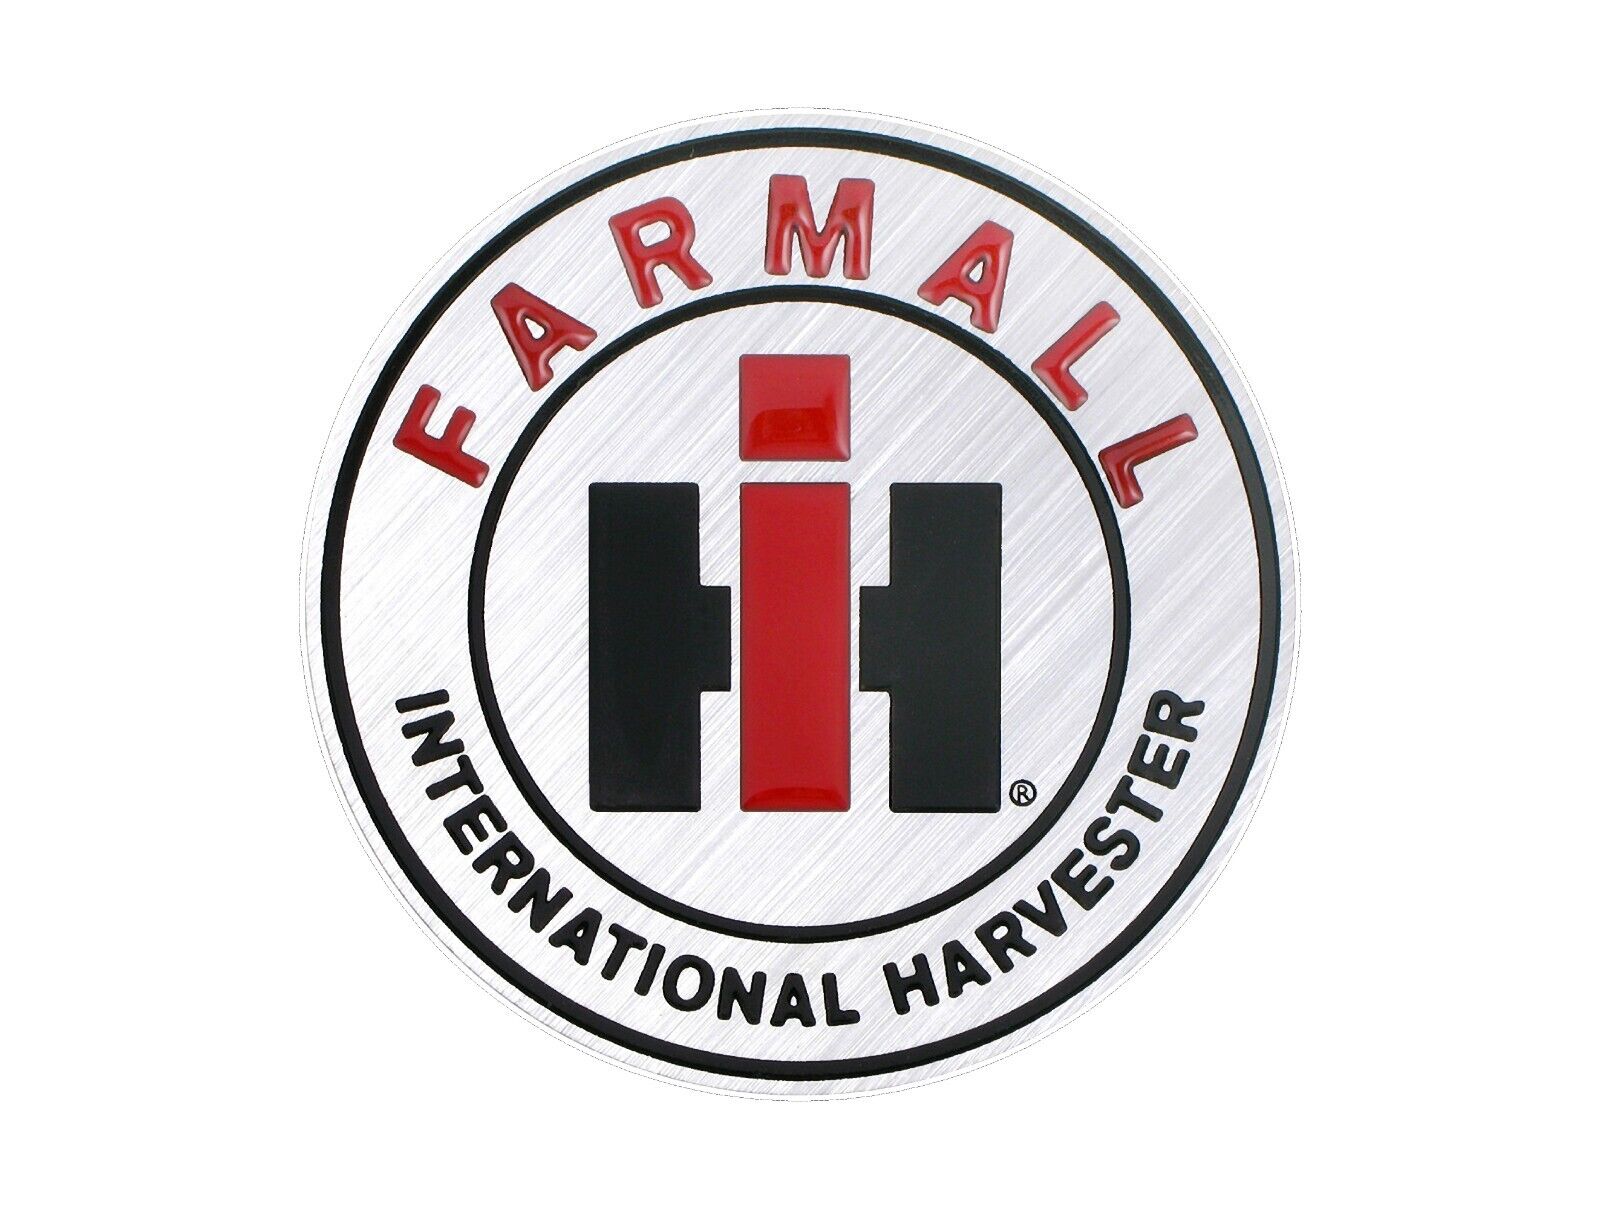 Farmall International Harvester Vintage - Historic  Round Emblem Sticker Decal